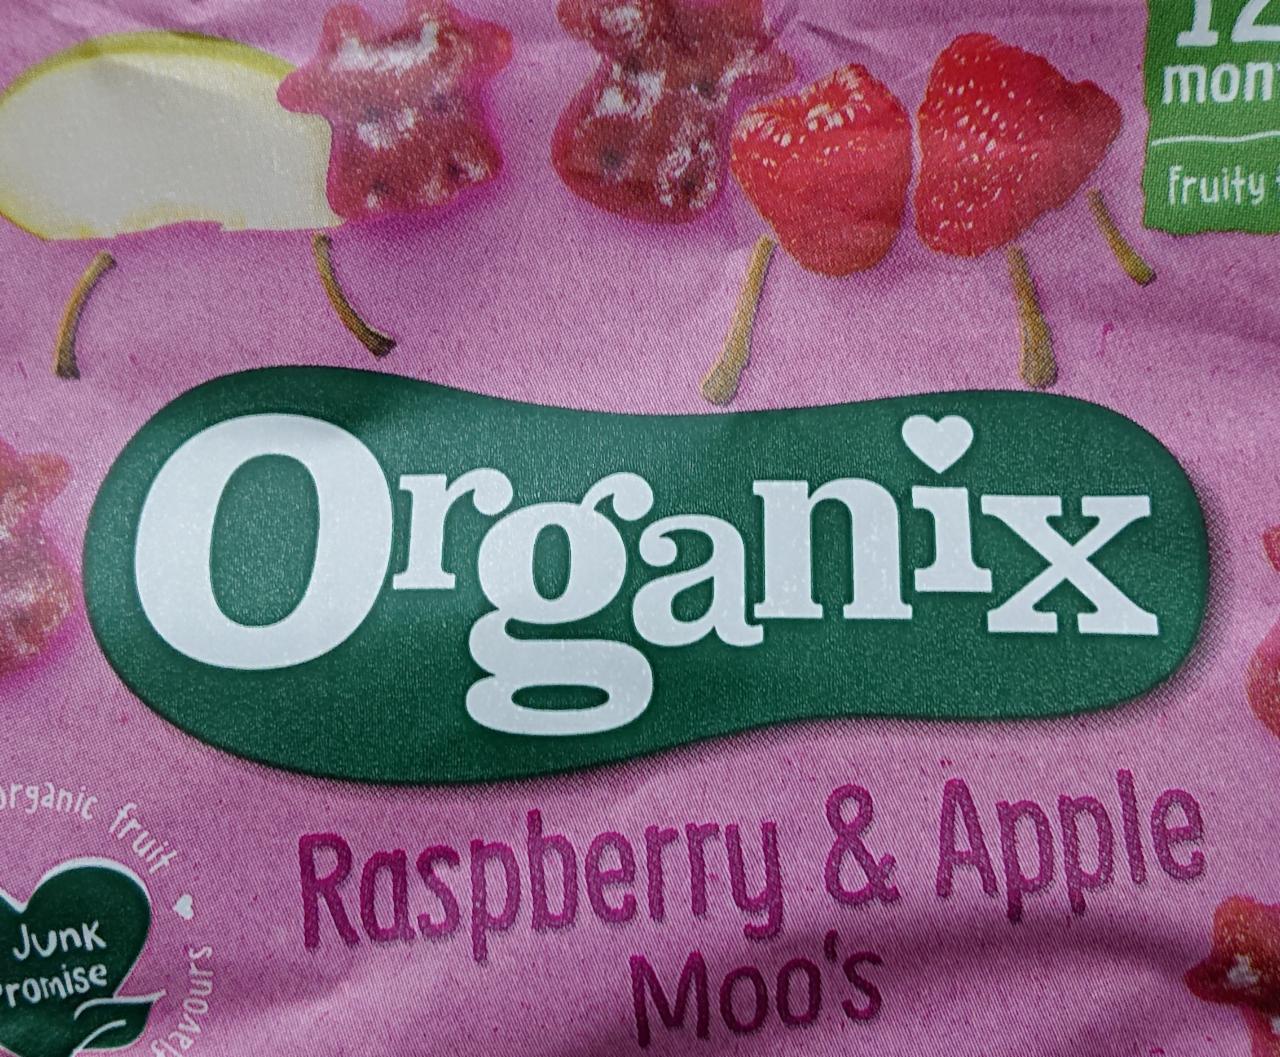 Fotografie - Raspberry & Apple Fruit Moo's Organix